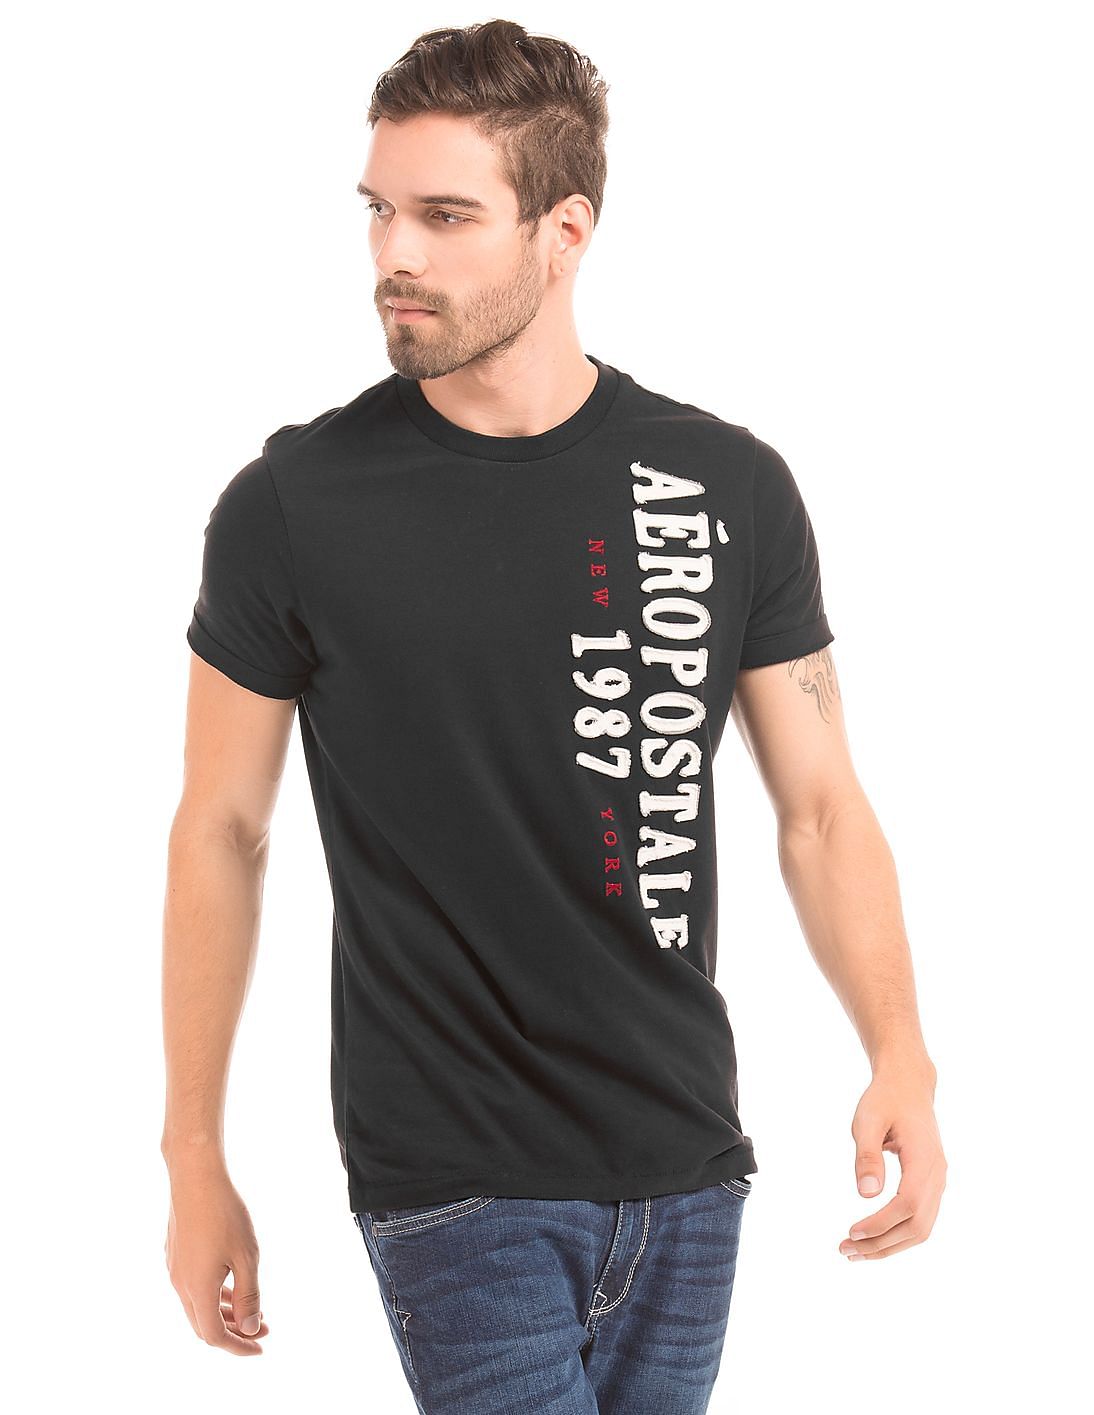 Buy Aeropostale Appliqued Front Cotton T-Shirt - NNNOW.com